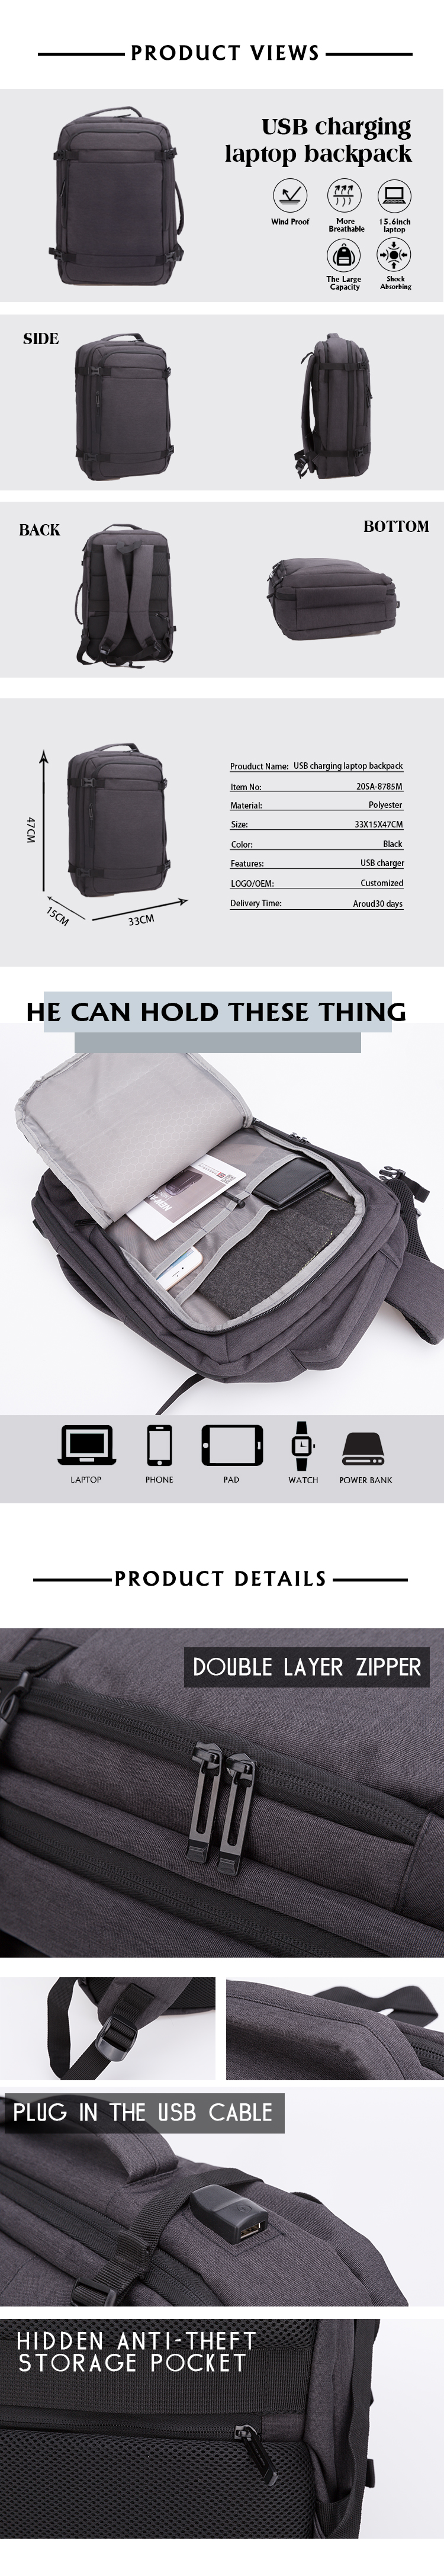 China Supplier Wholesale Men Fashion Laptop Backpack